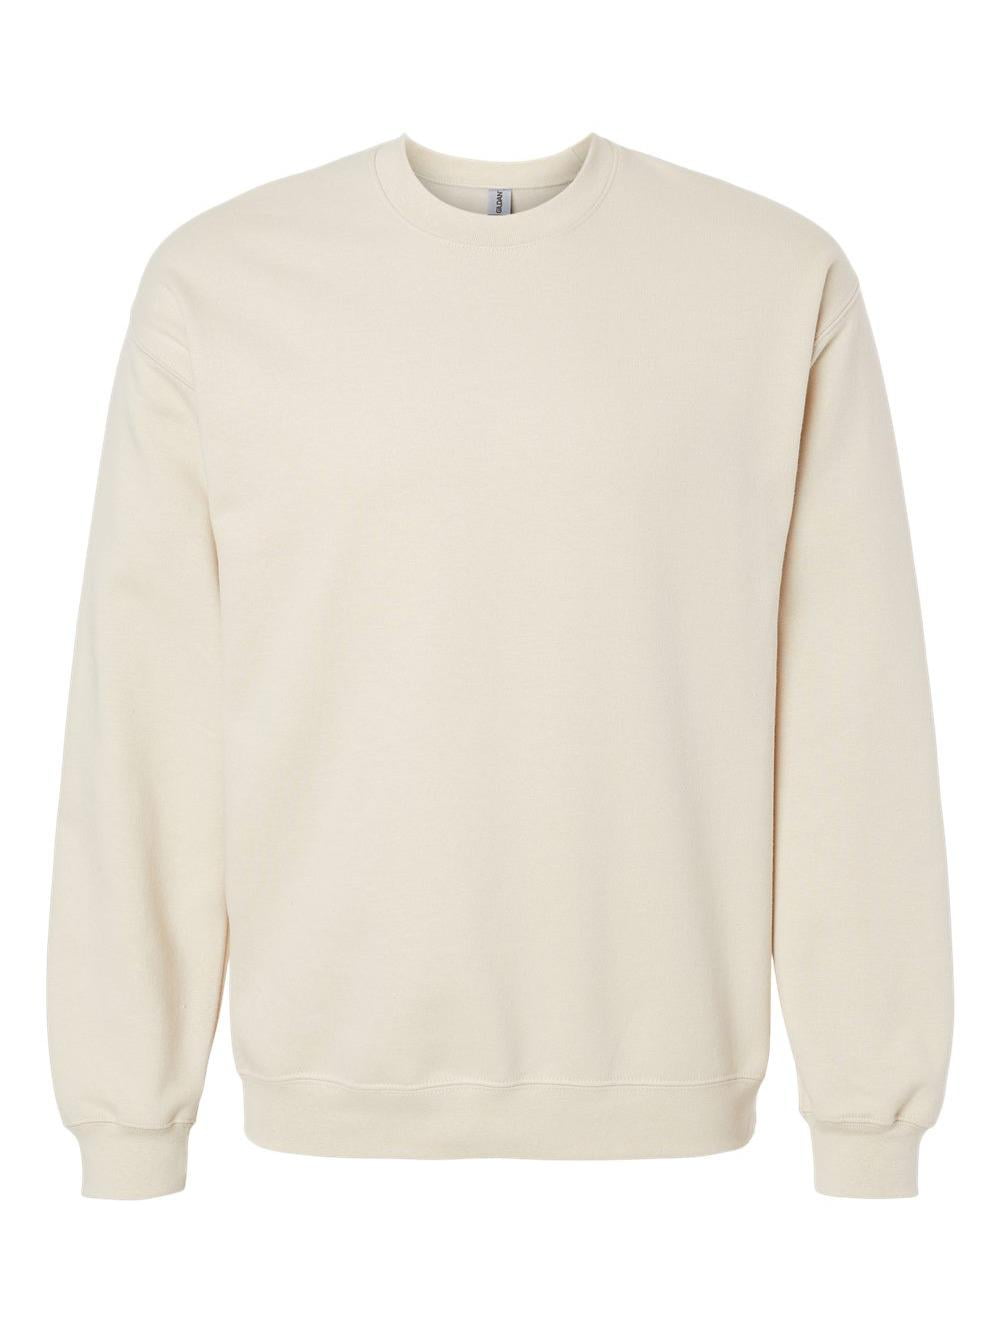 Gildan - Softstyle Crewneck Sweatshirt - SF000 - Sand - Size: L ...